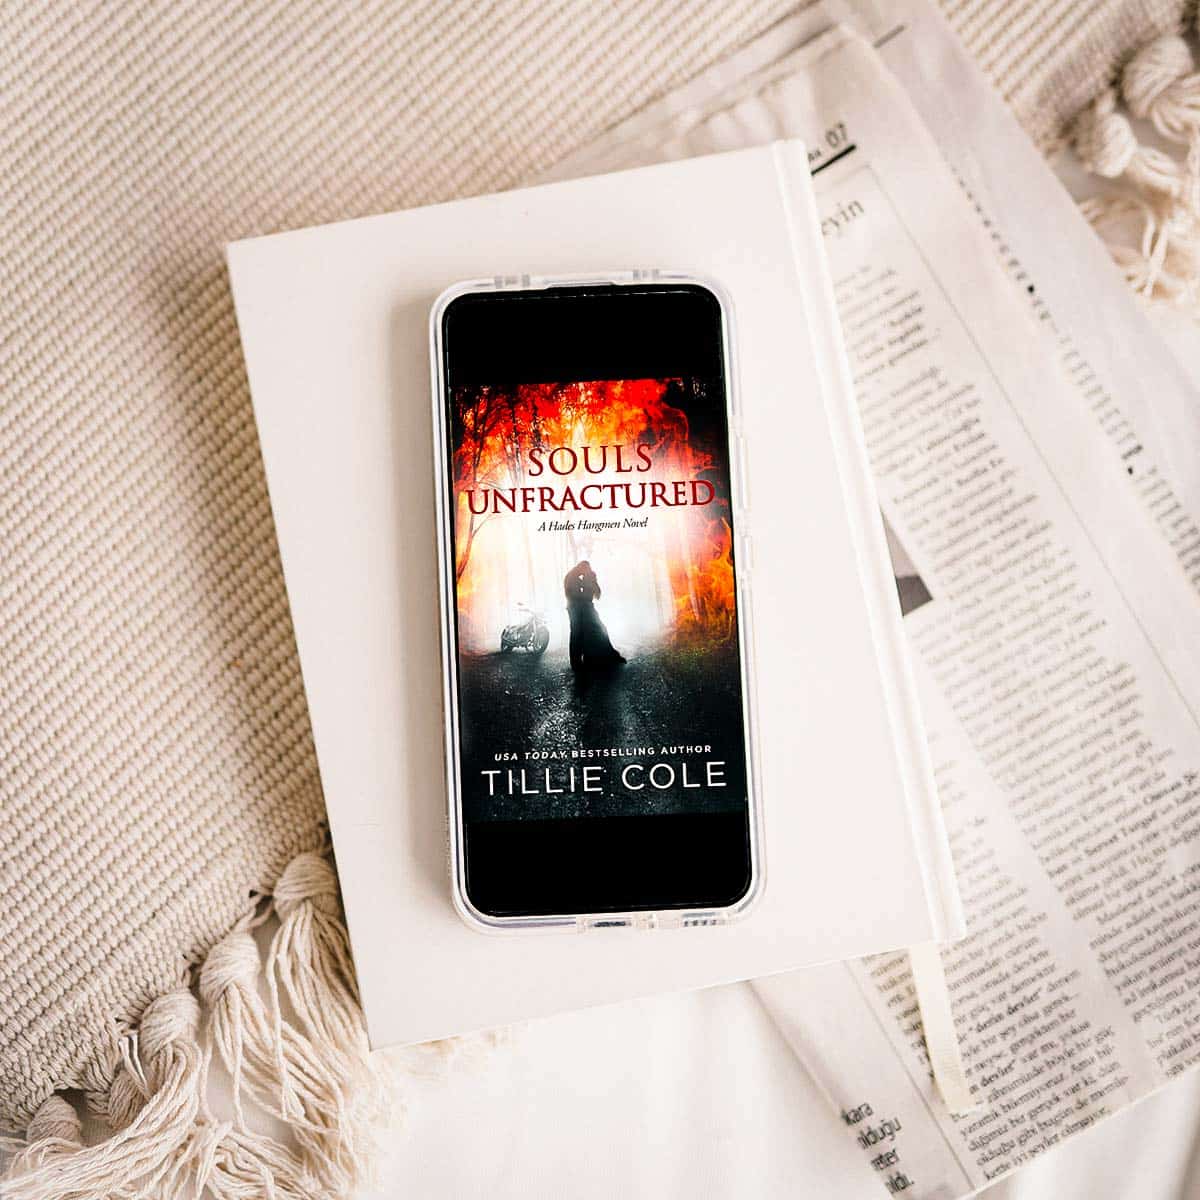 Souls Unfractured by Tillie Cole – Hades Hangmen Book 3